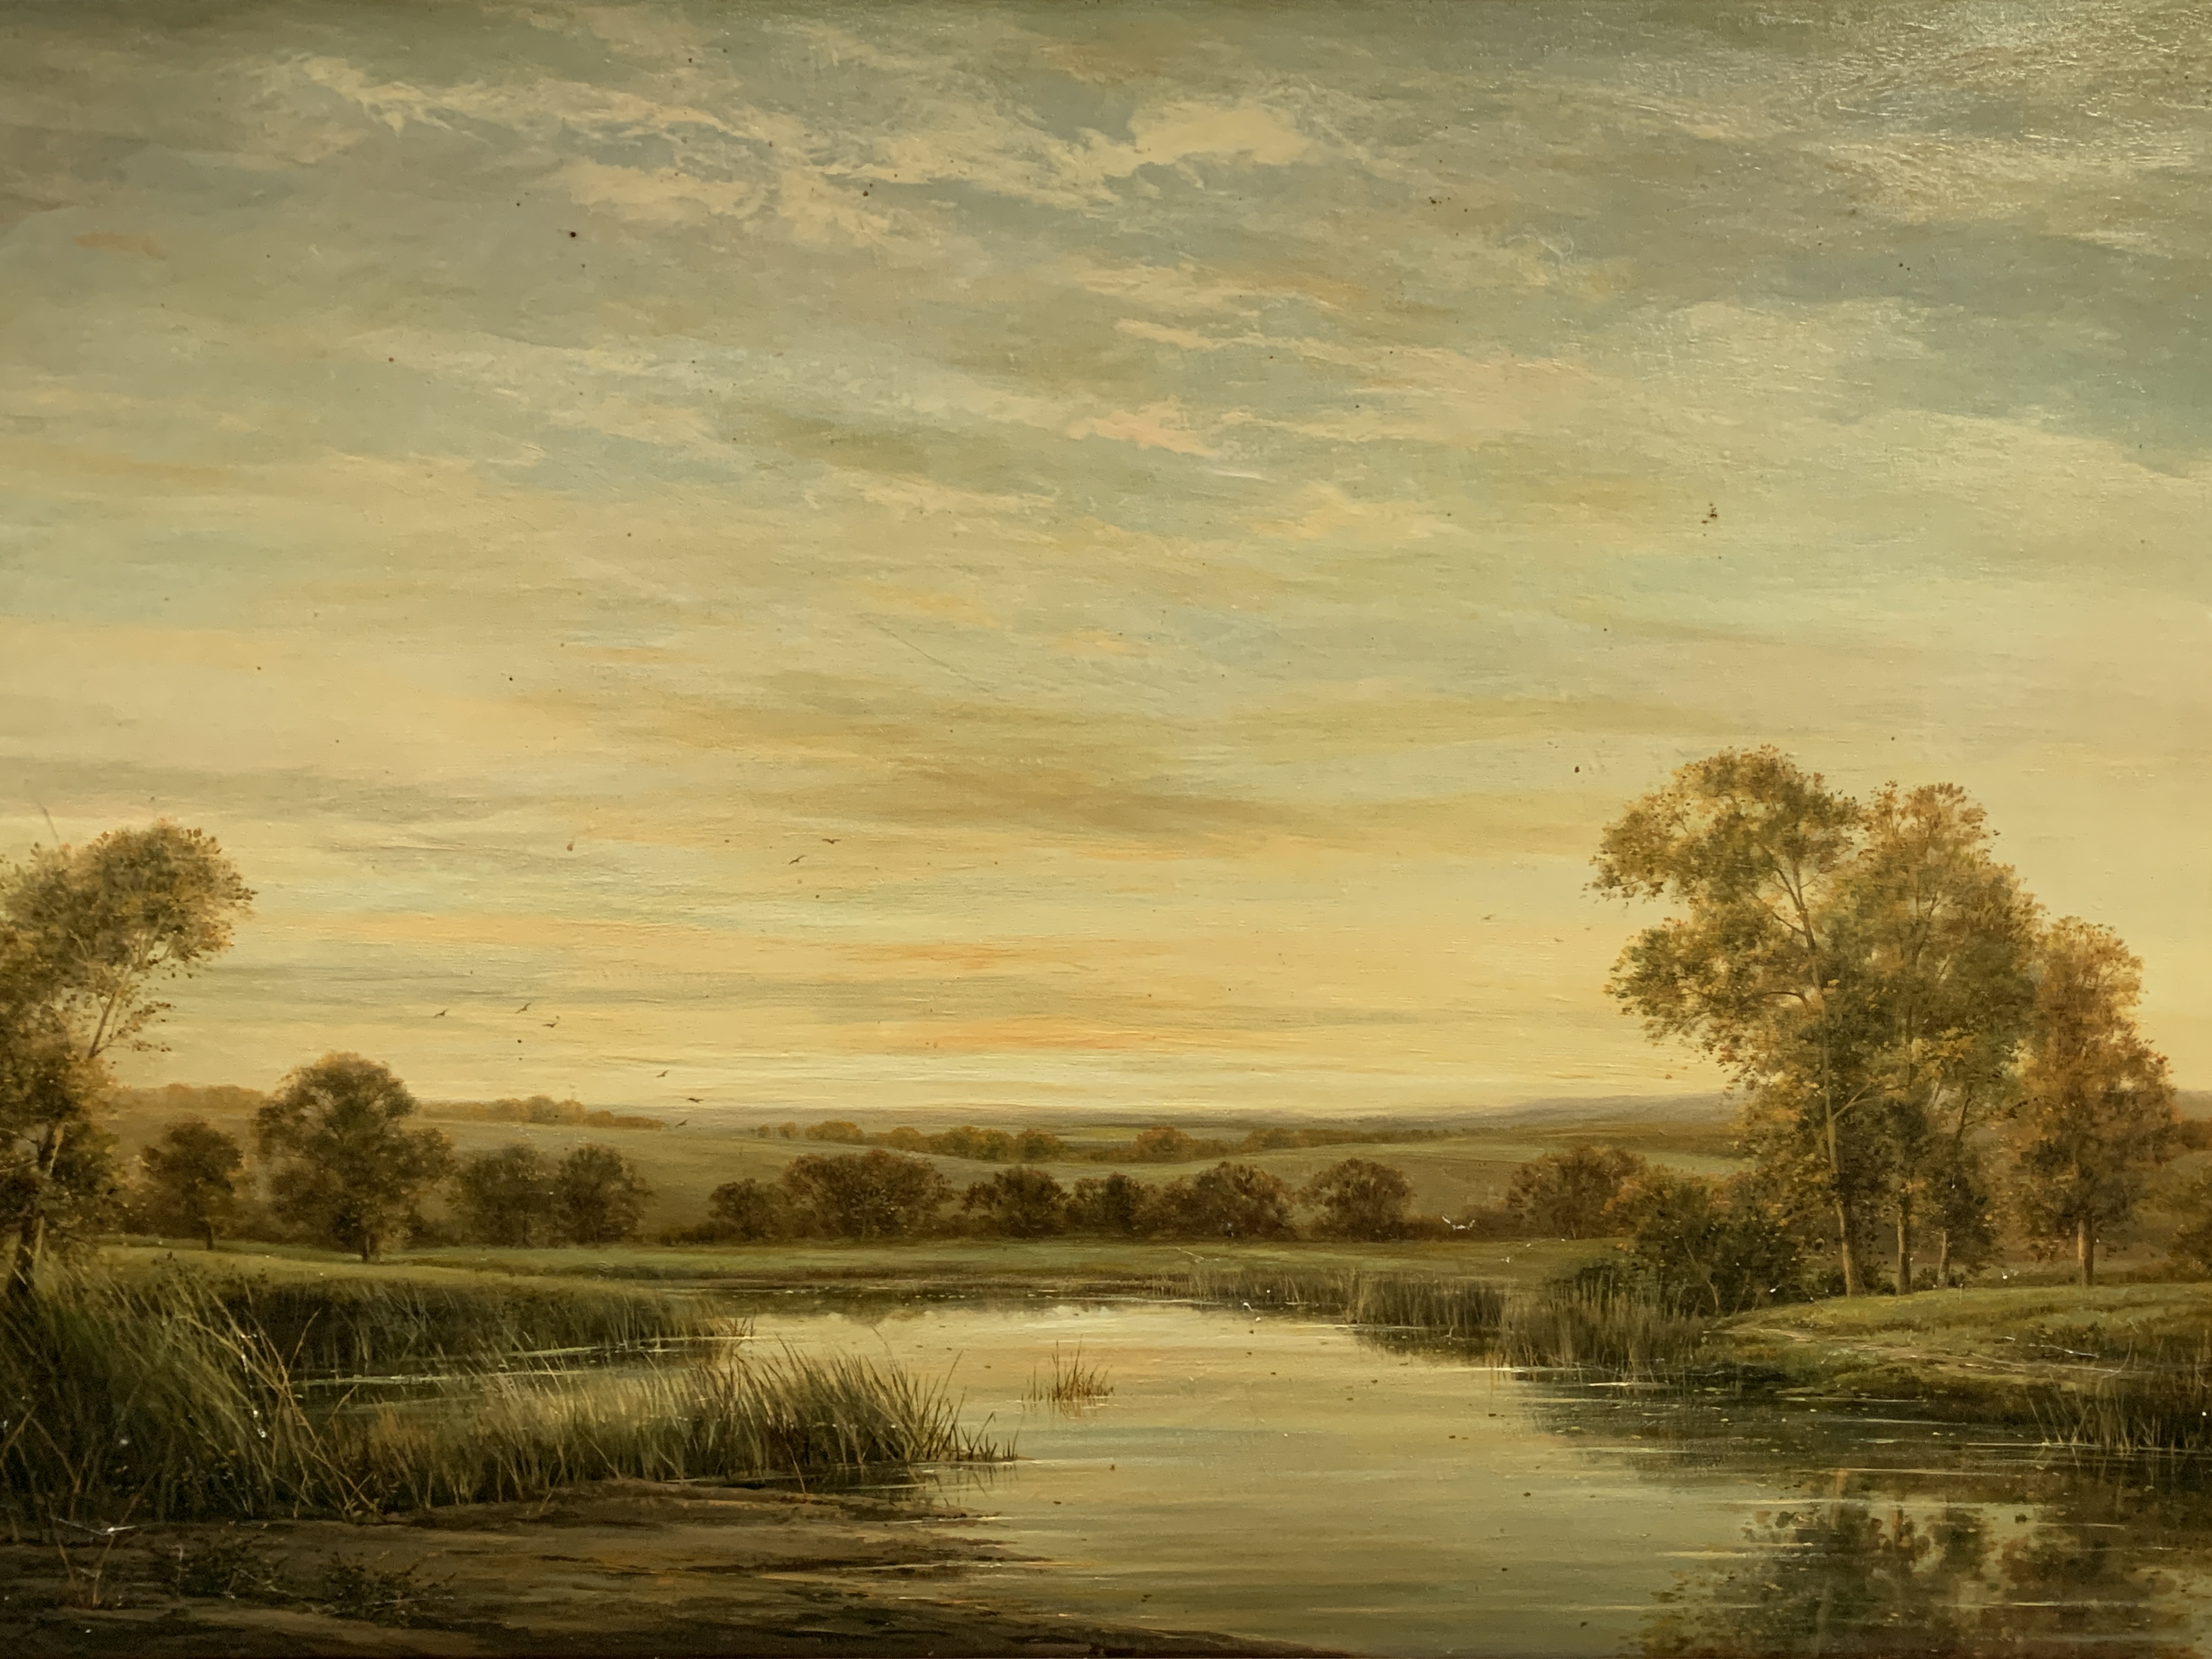 Gilt framed oil on canvas of a river and landscape, written on reverse "On the River Kennett"